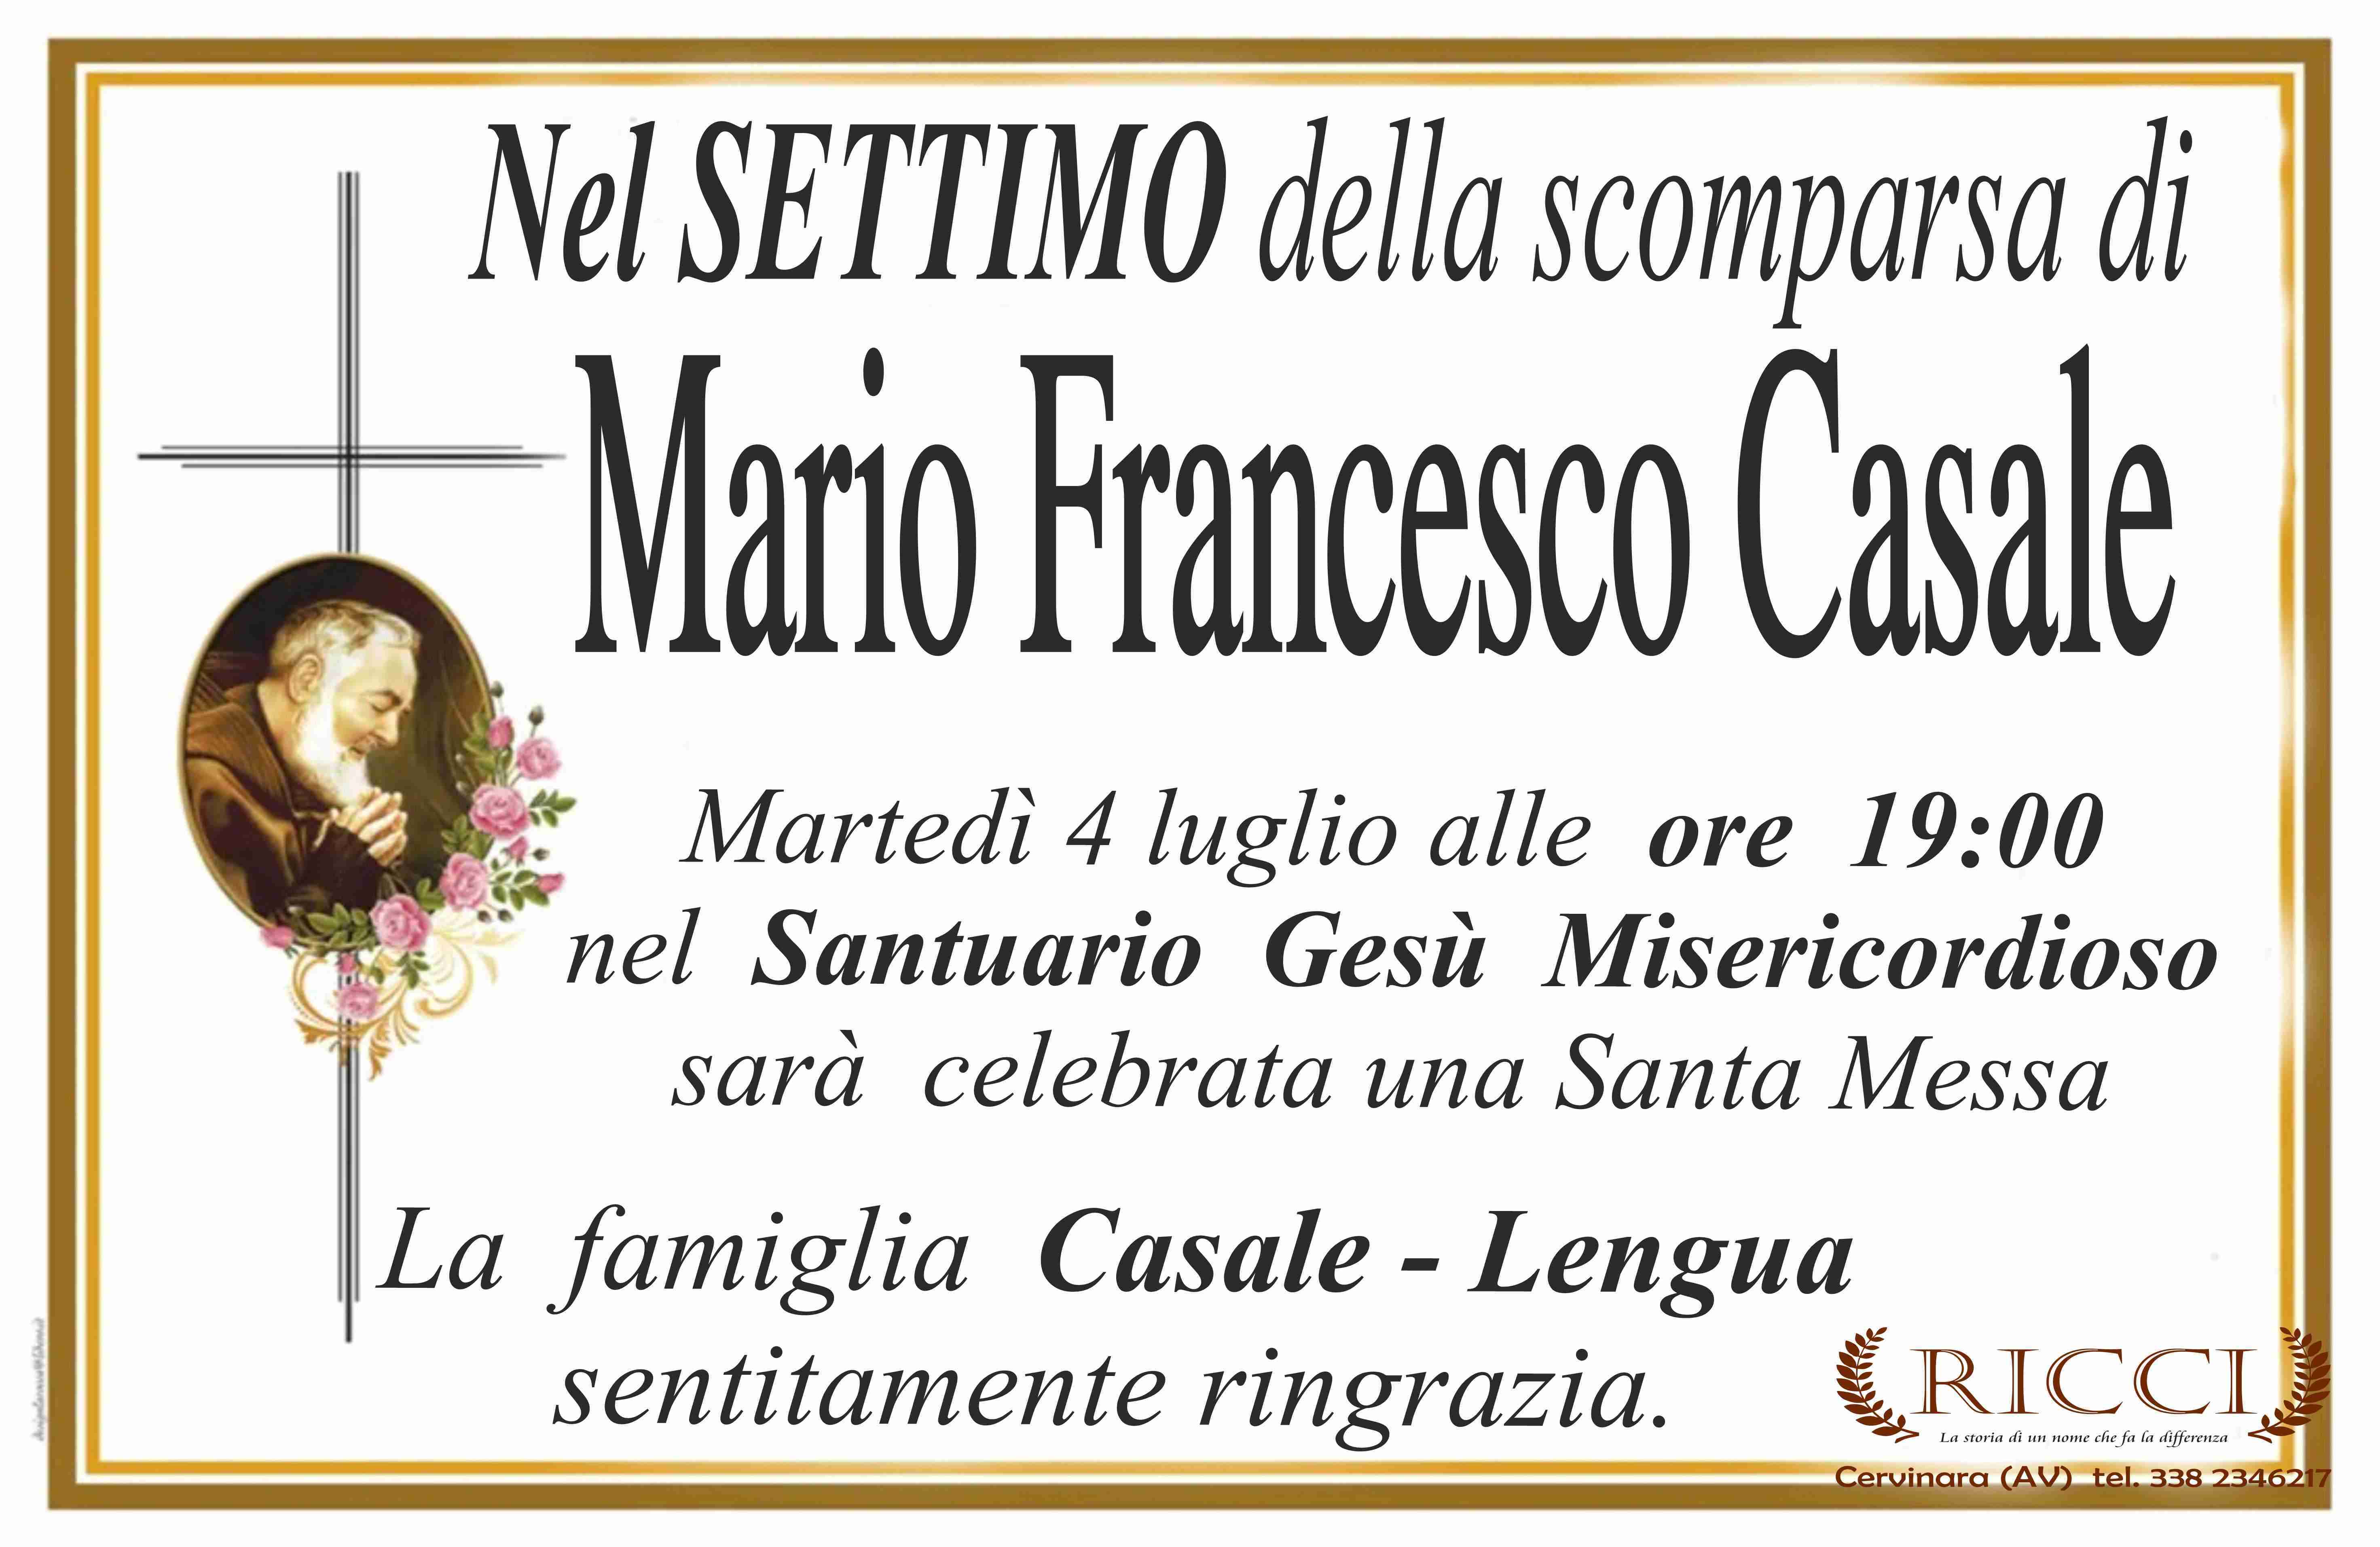 Mario Francesco Casale